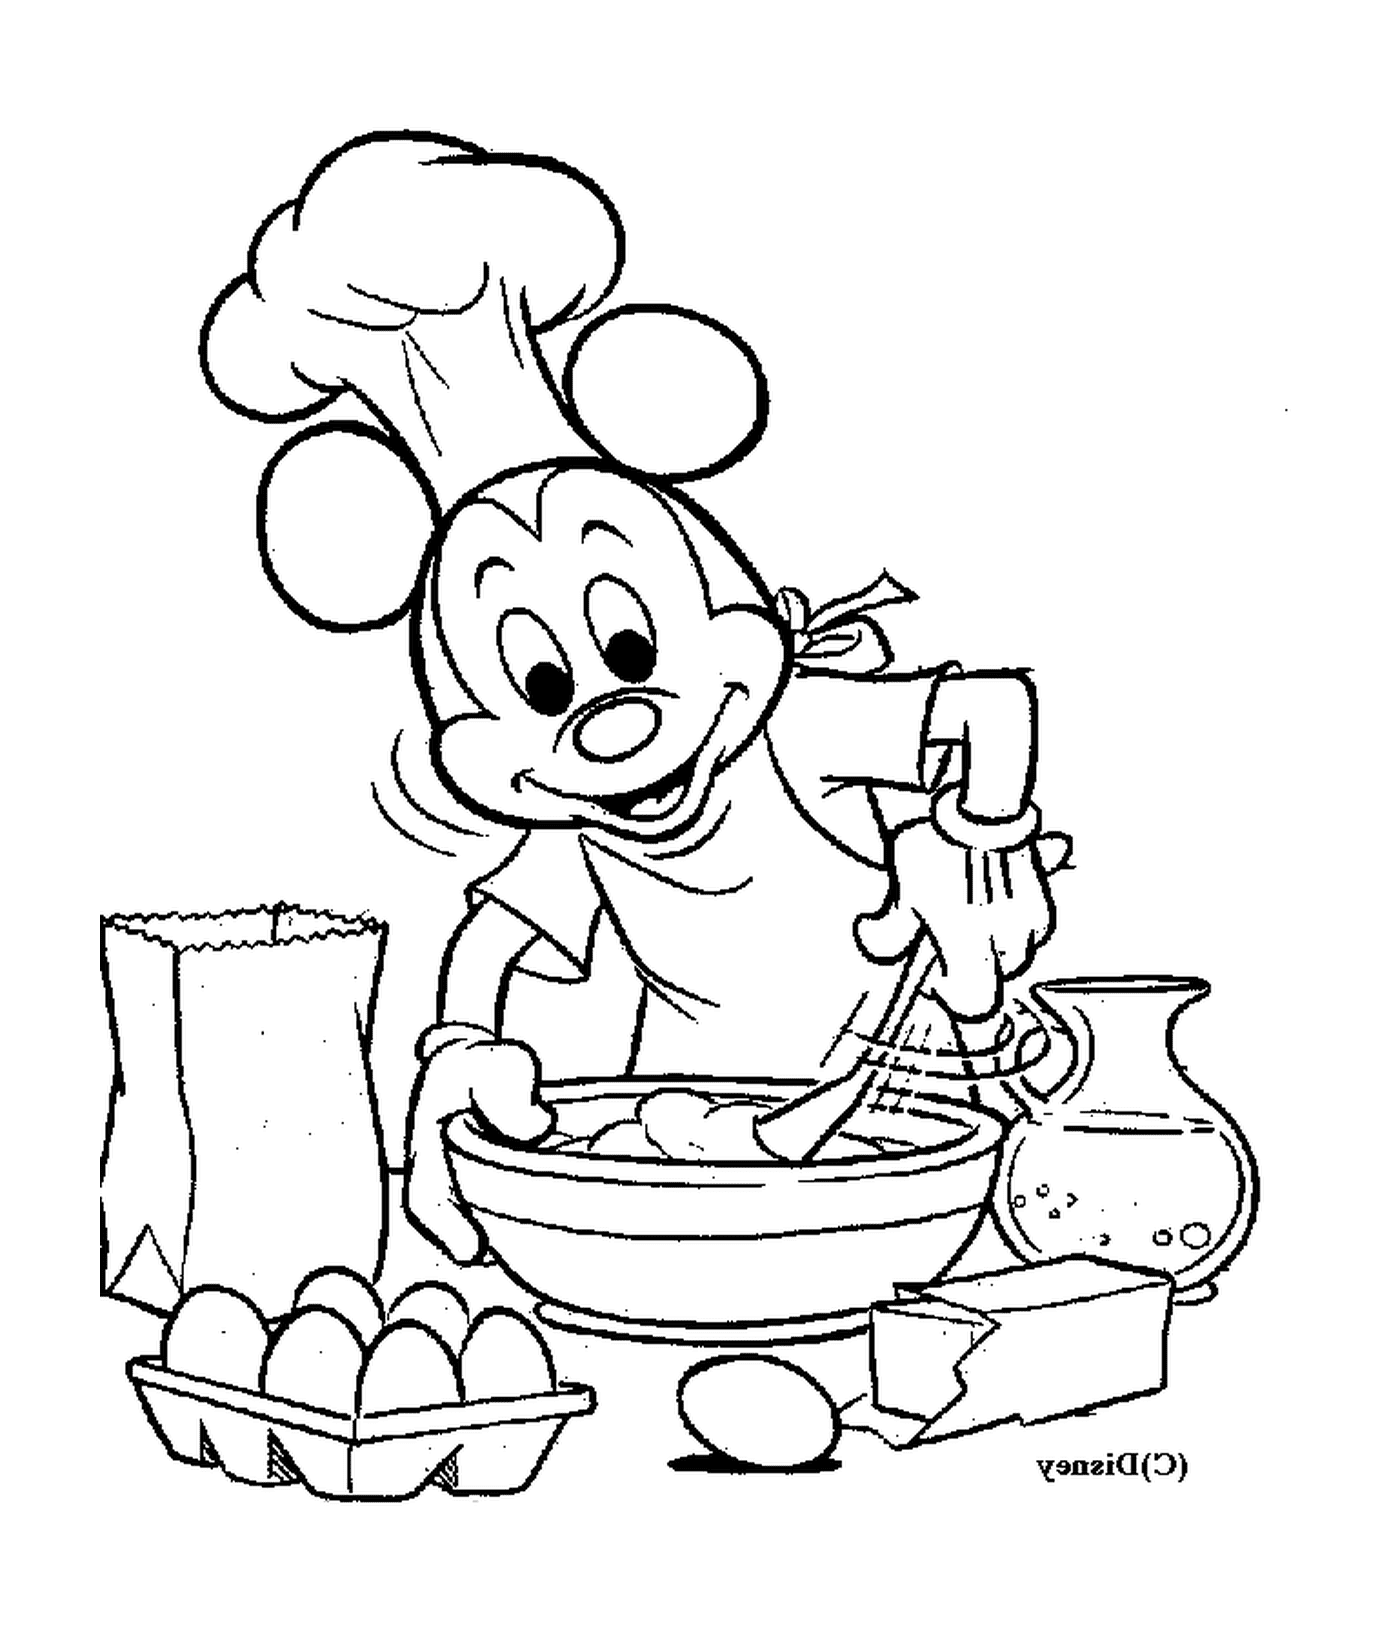  Cucina Mickey: chef Mickey Mouse mescolando uova 